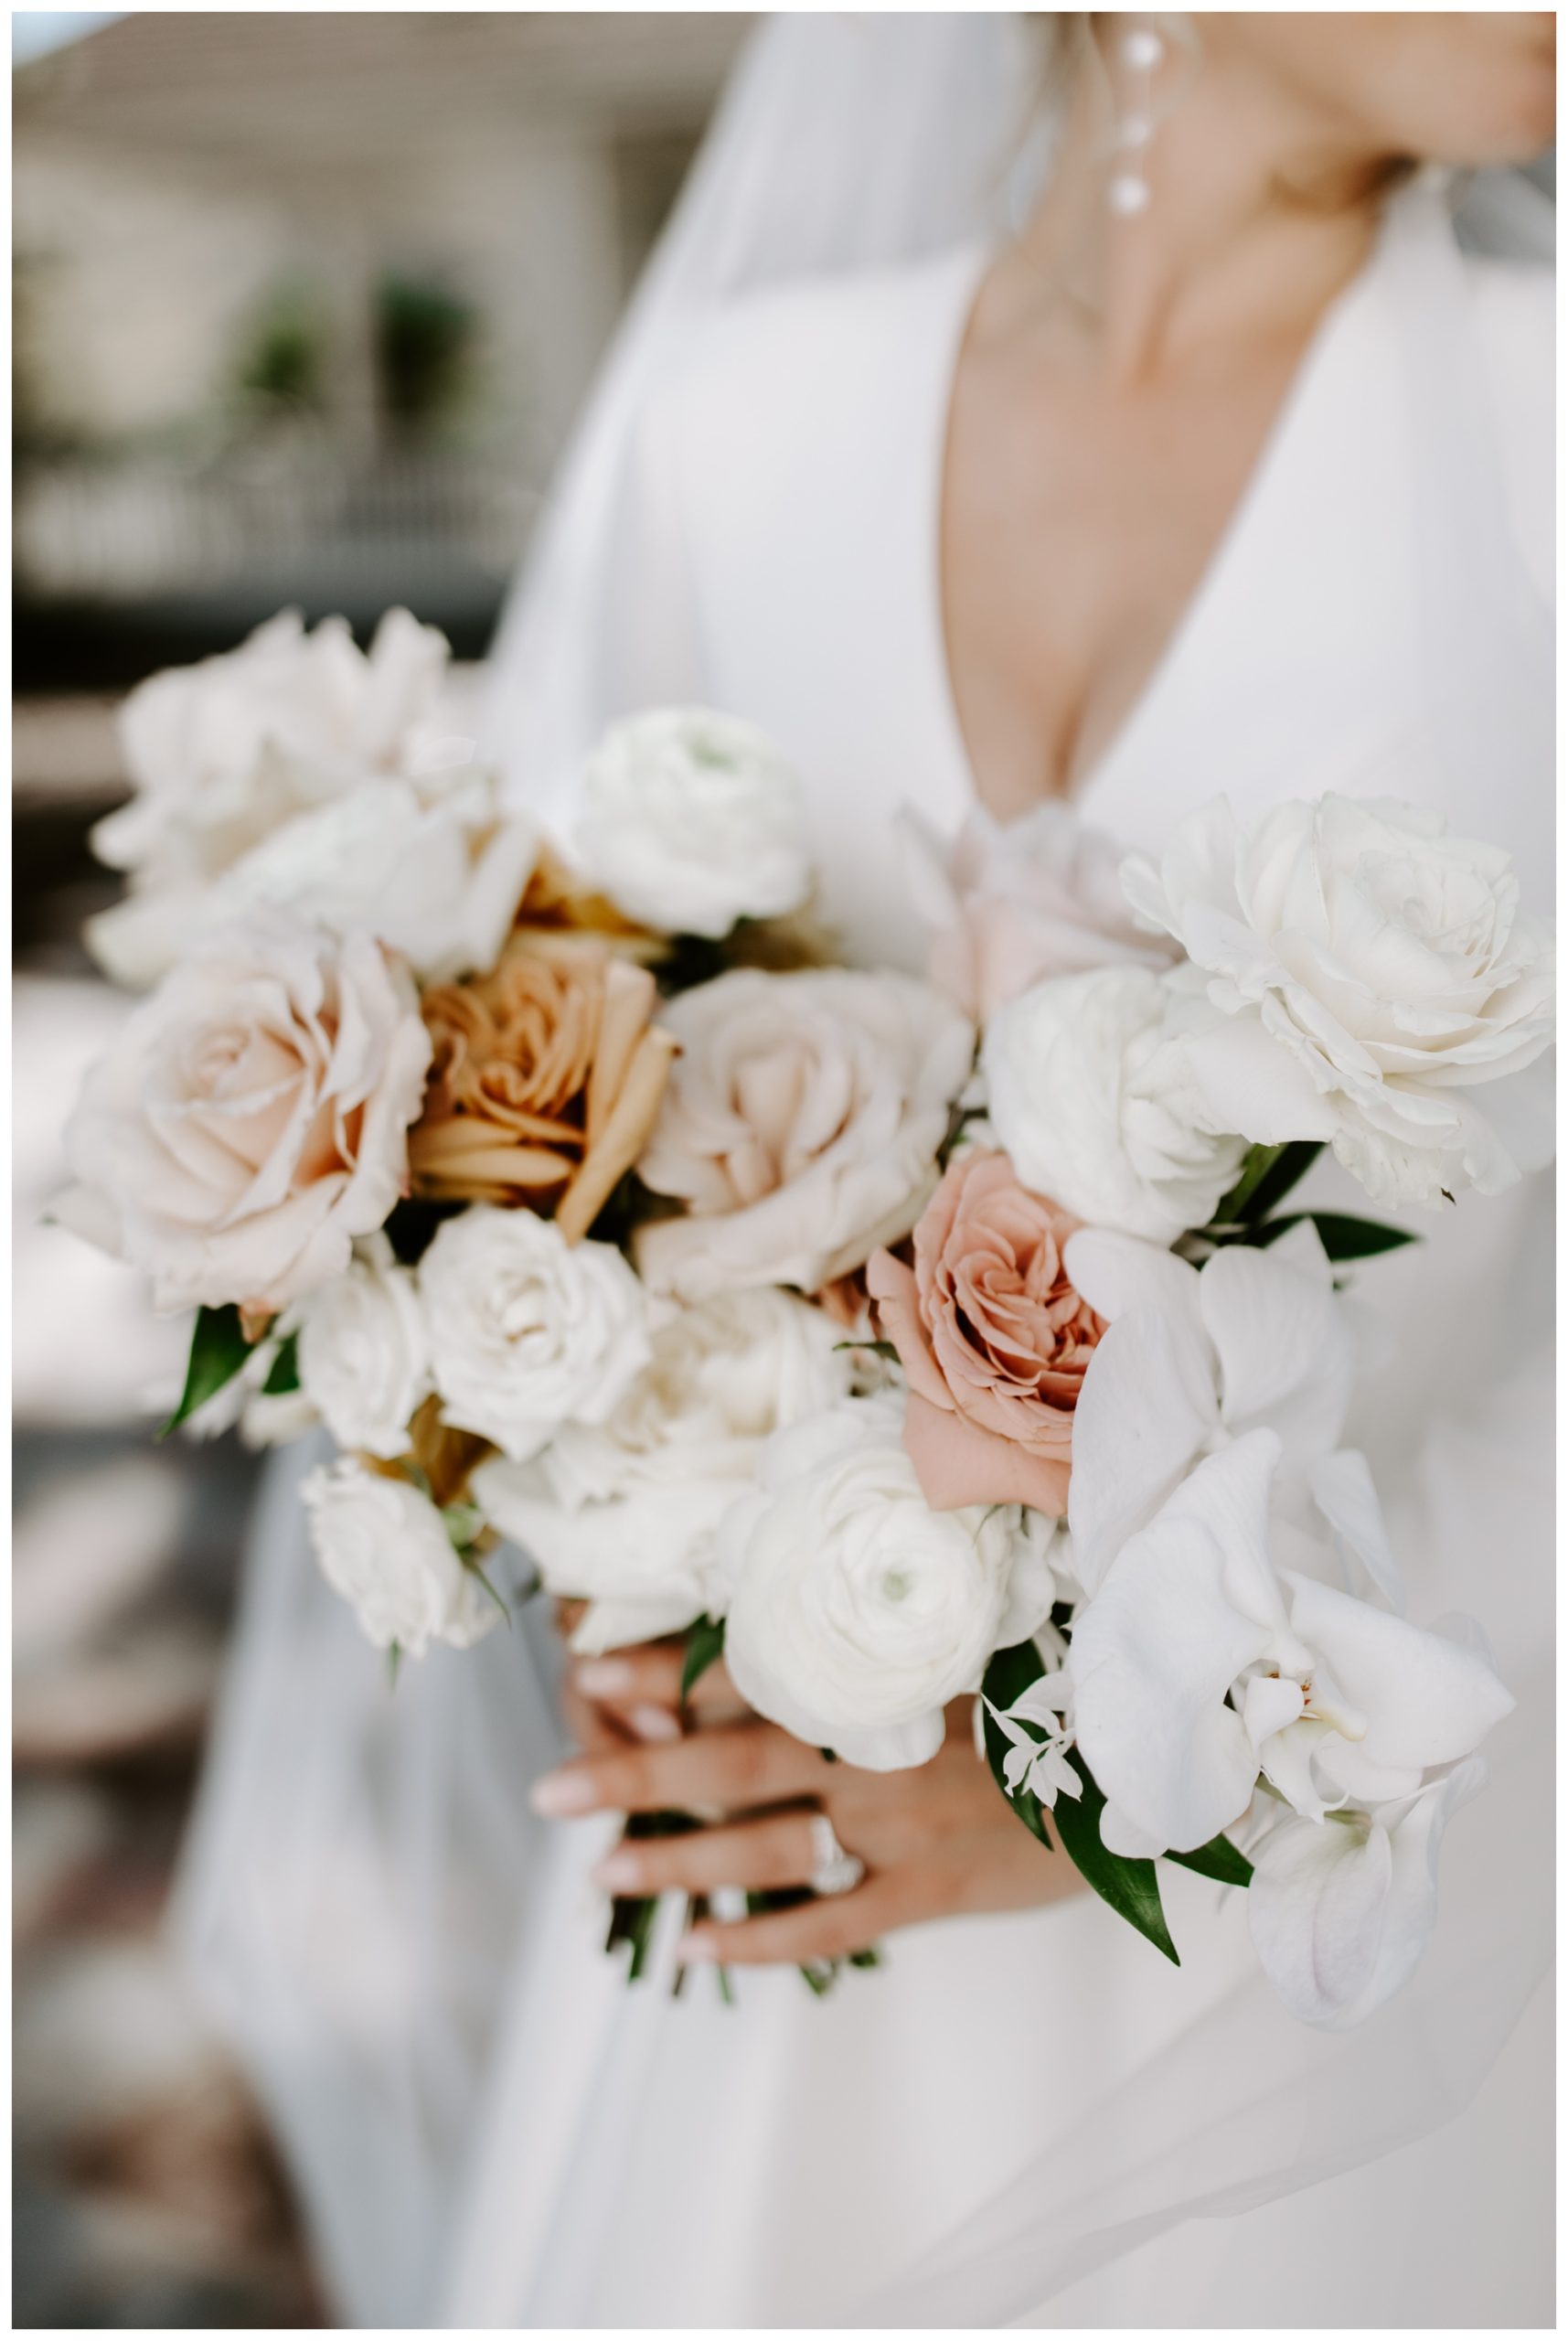 Denver wedding florists